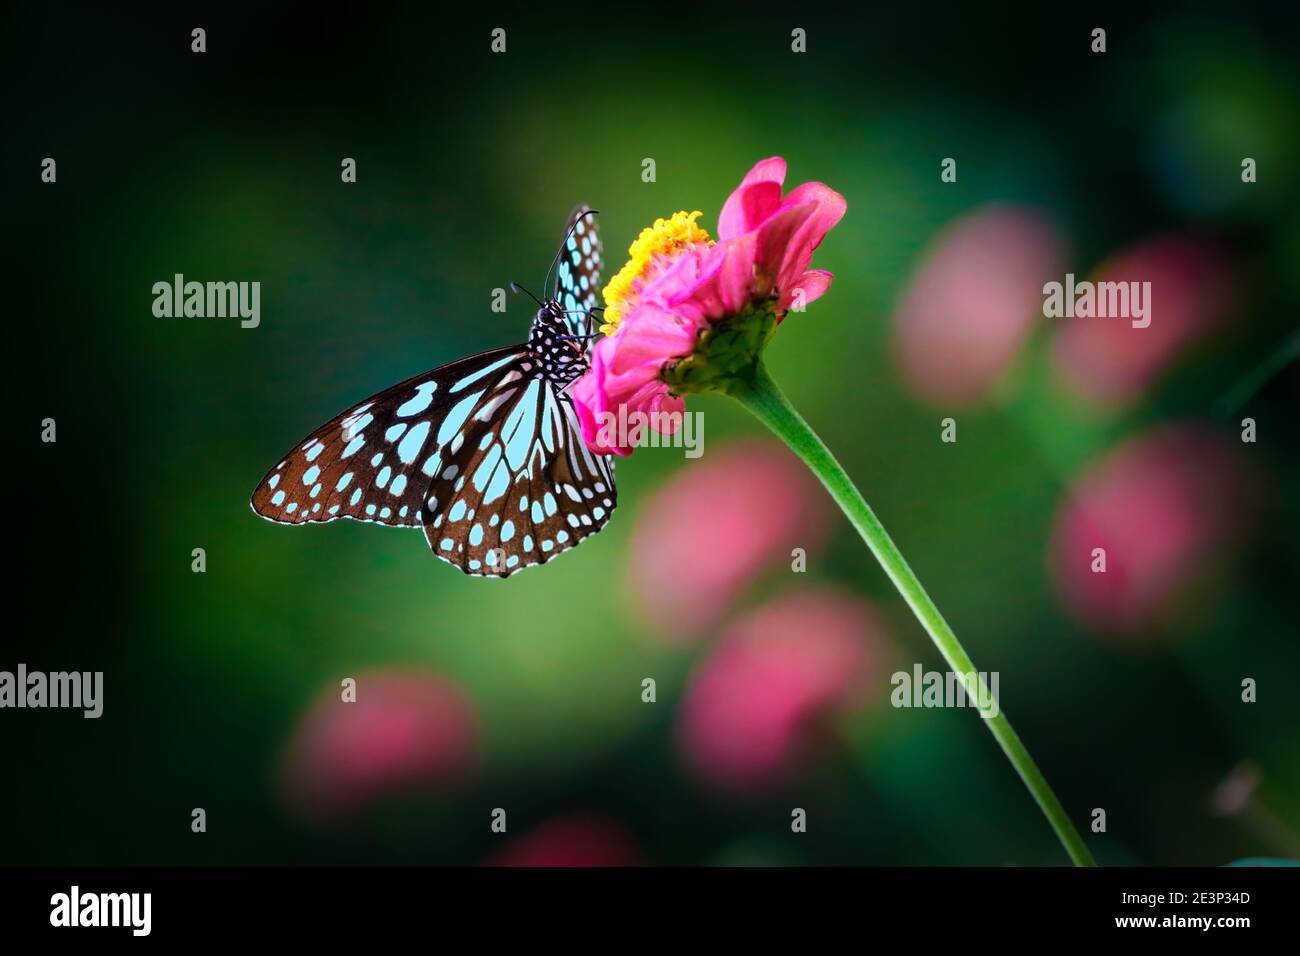 Mariposa de tigre azul en una flor de zinnia rosa con oscuro fondo rosa verde Foto de stock